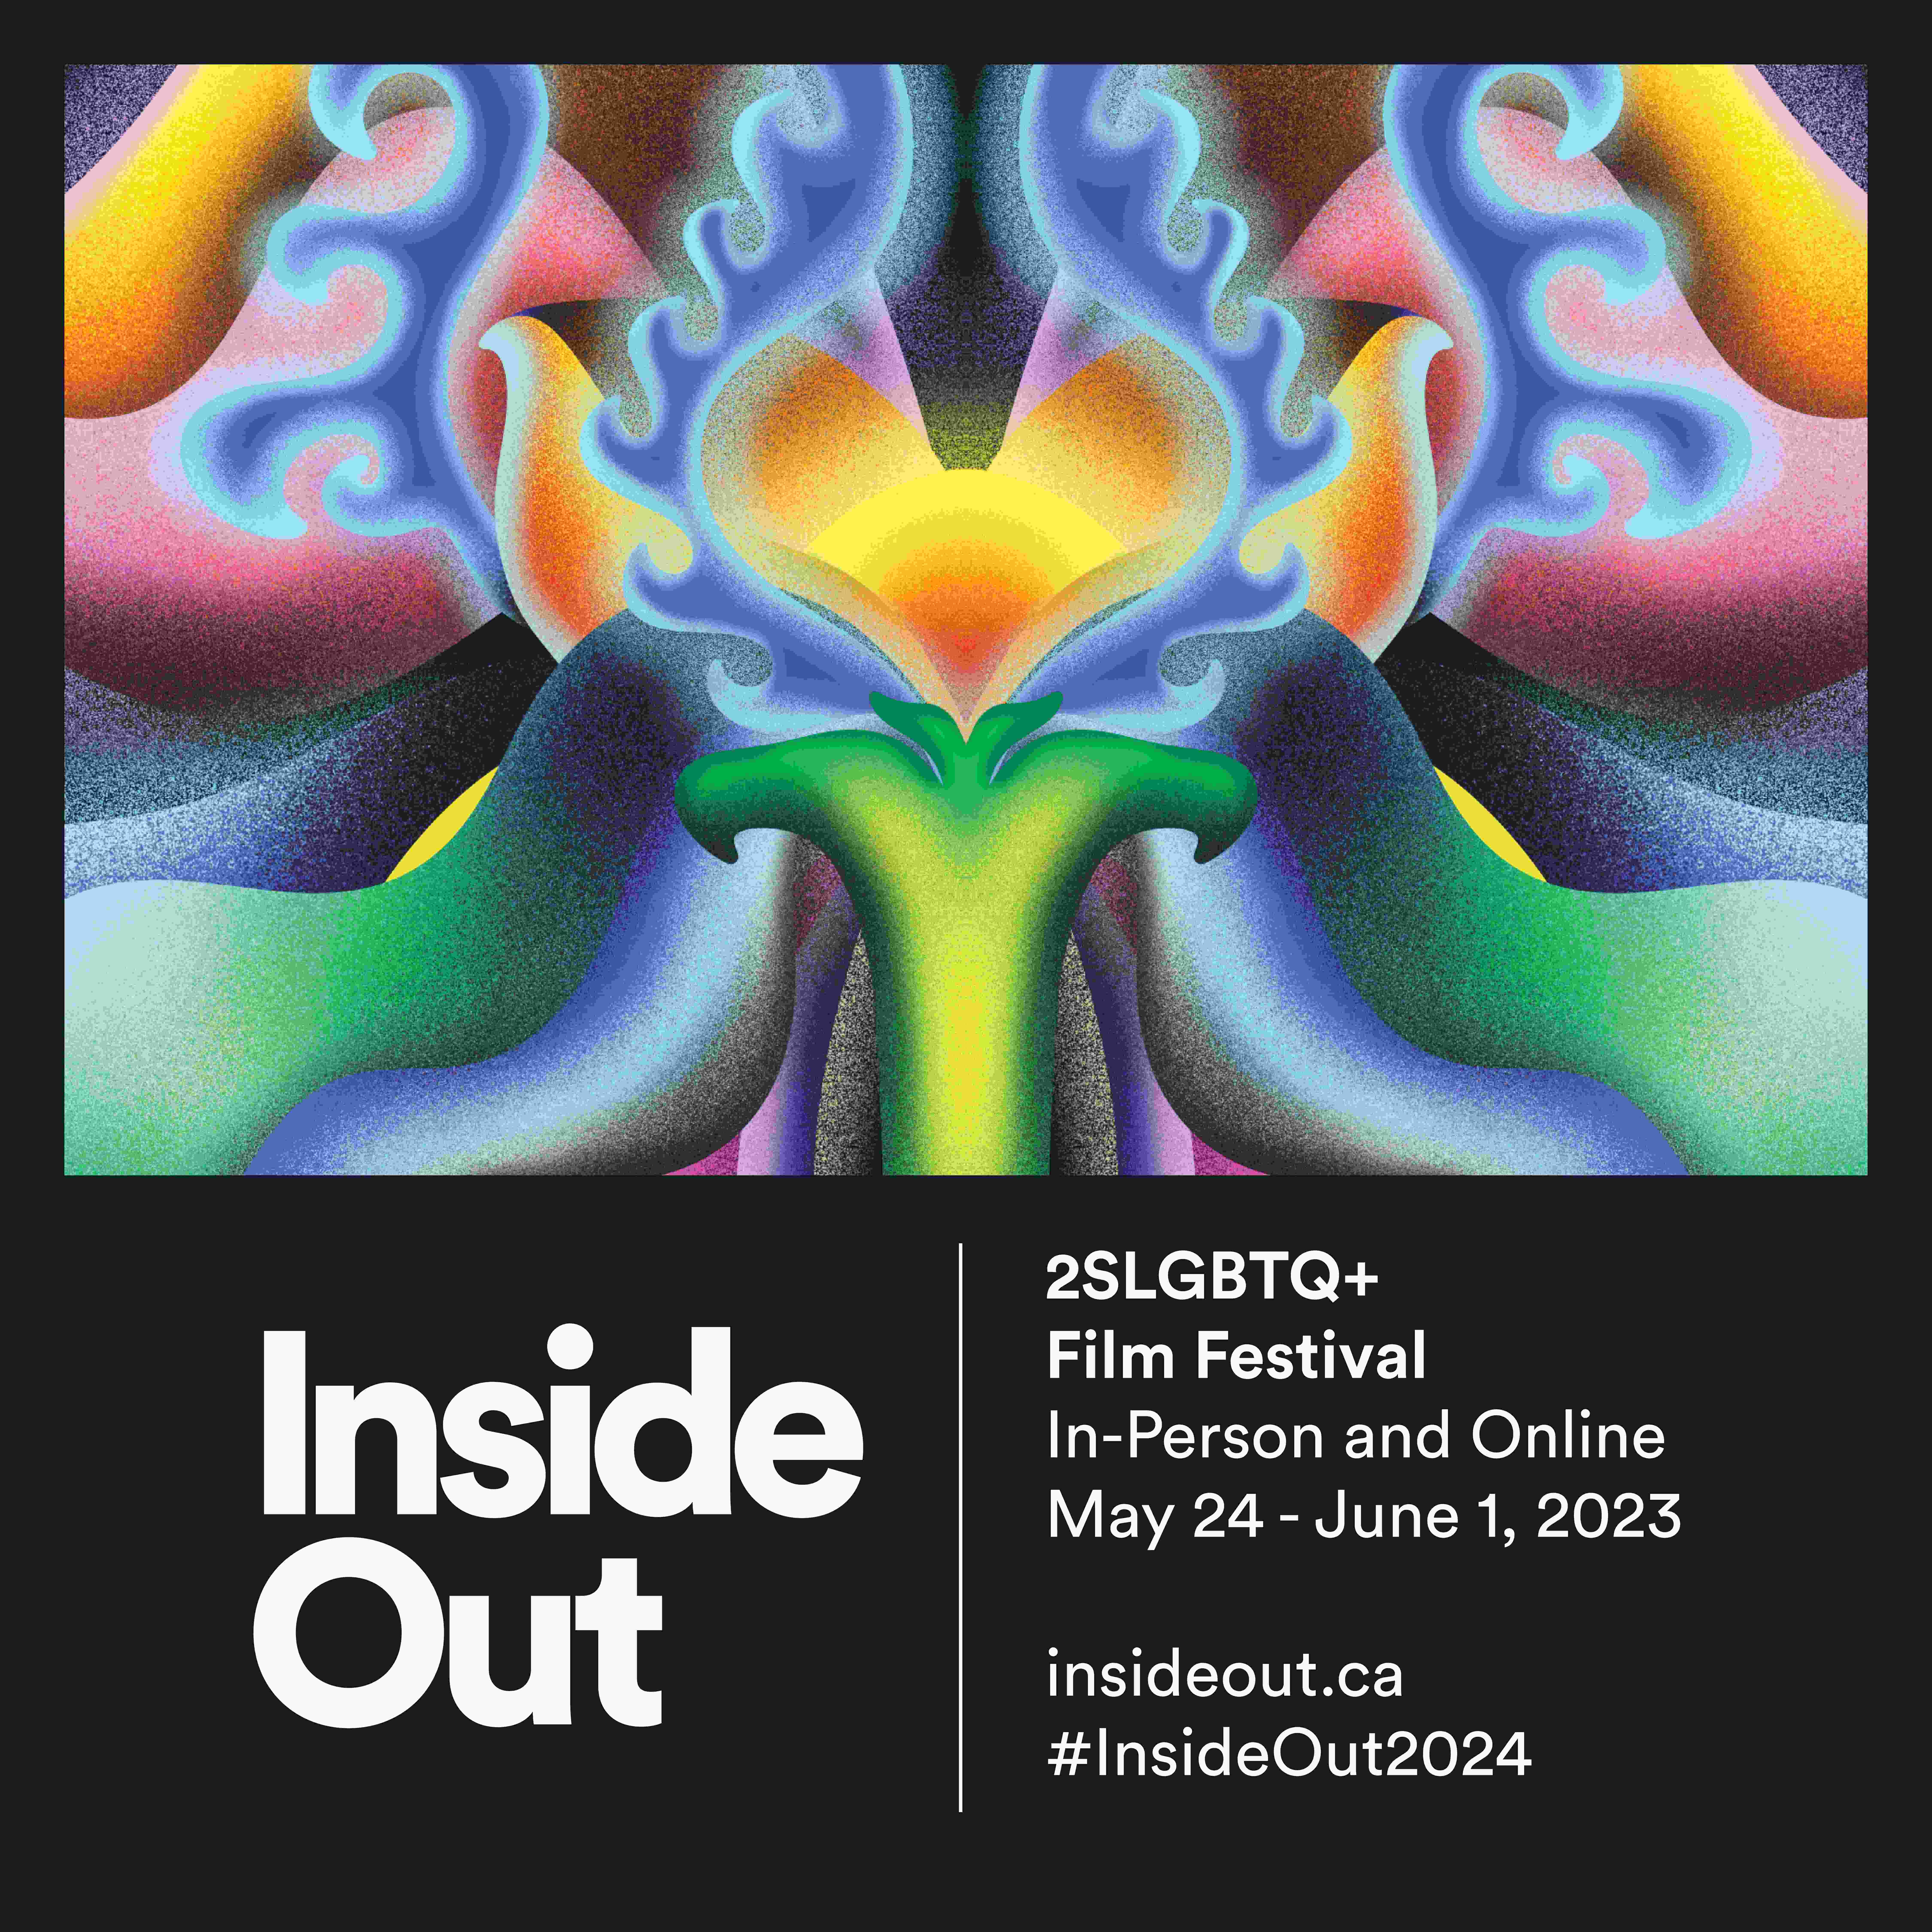 Inside Out Toronto 2SLGBTQ+ Film Festival